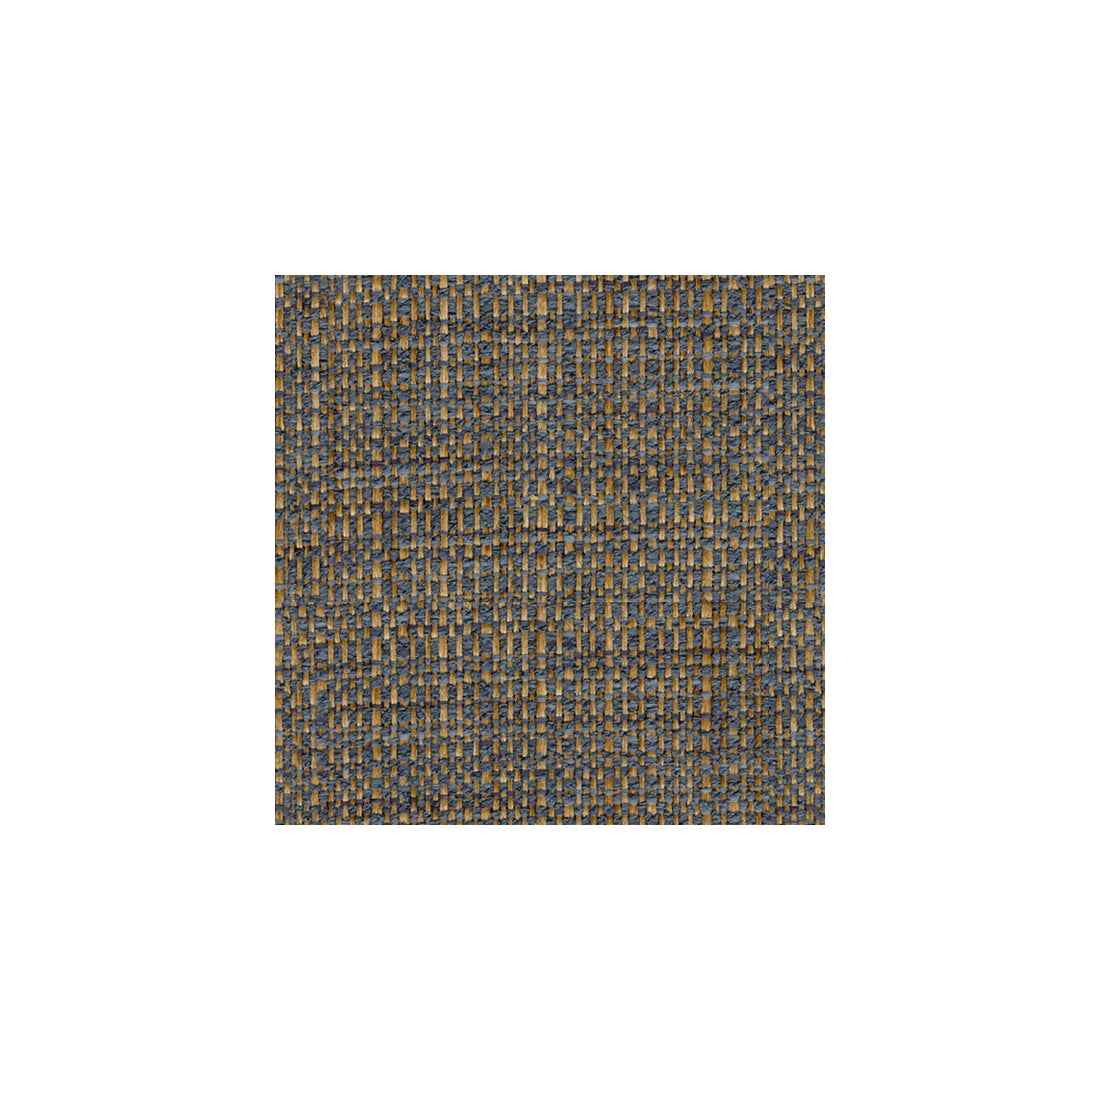 Kf Smt fabric - pattern 31747.514.0 - by Kravet Smart